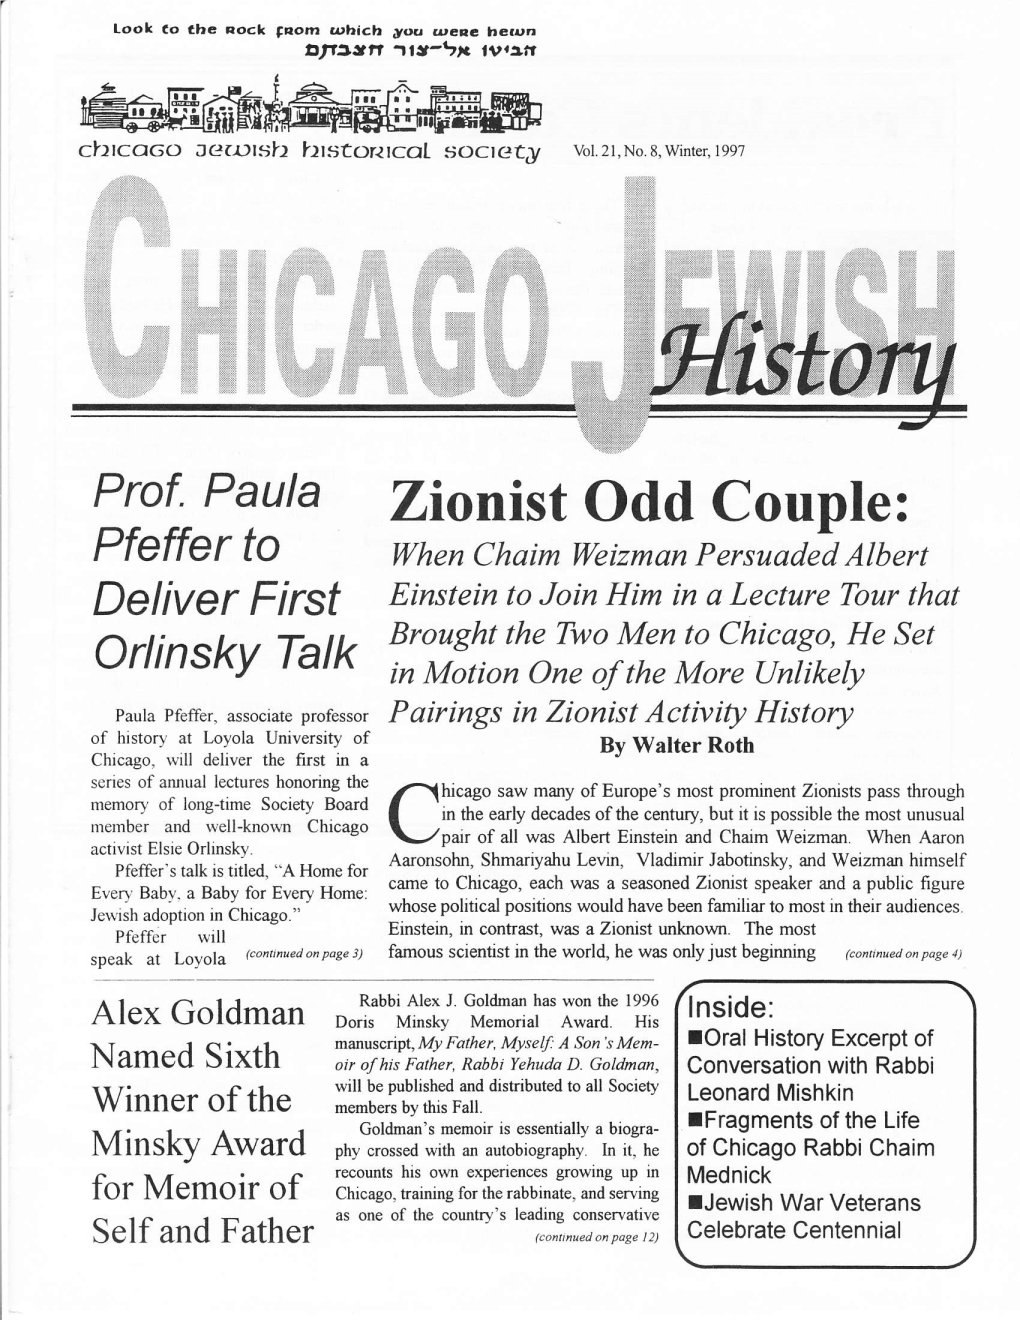 Zionist Odd Couple